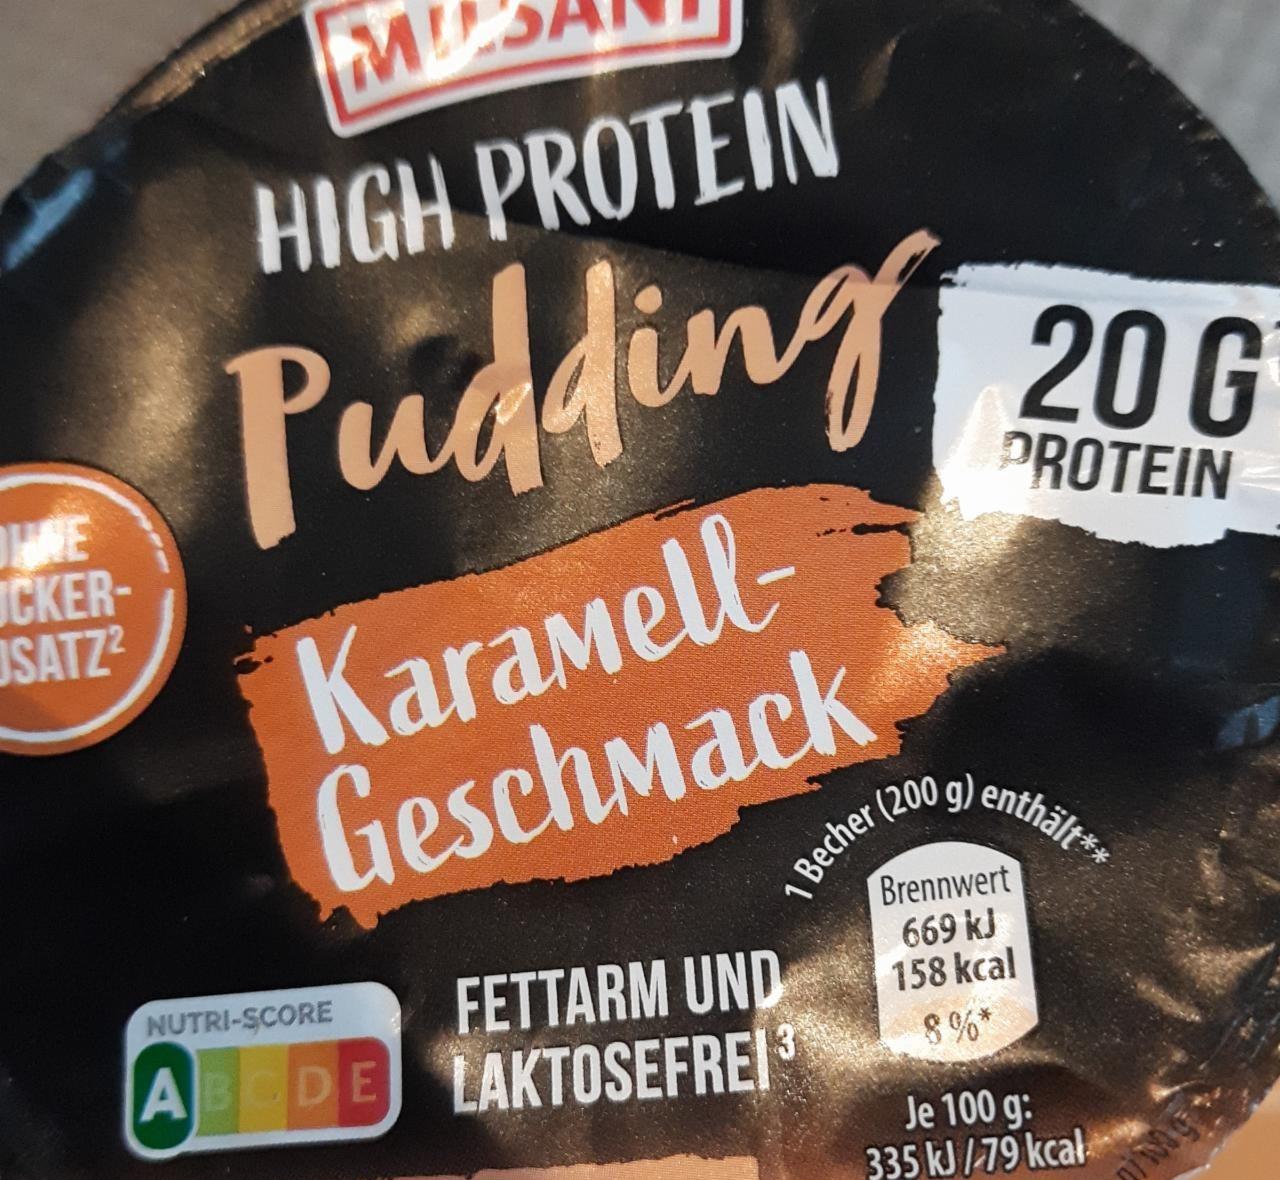 Фото - High-Protein-Pudding - Karamellgeschmack Milsani